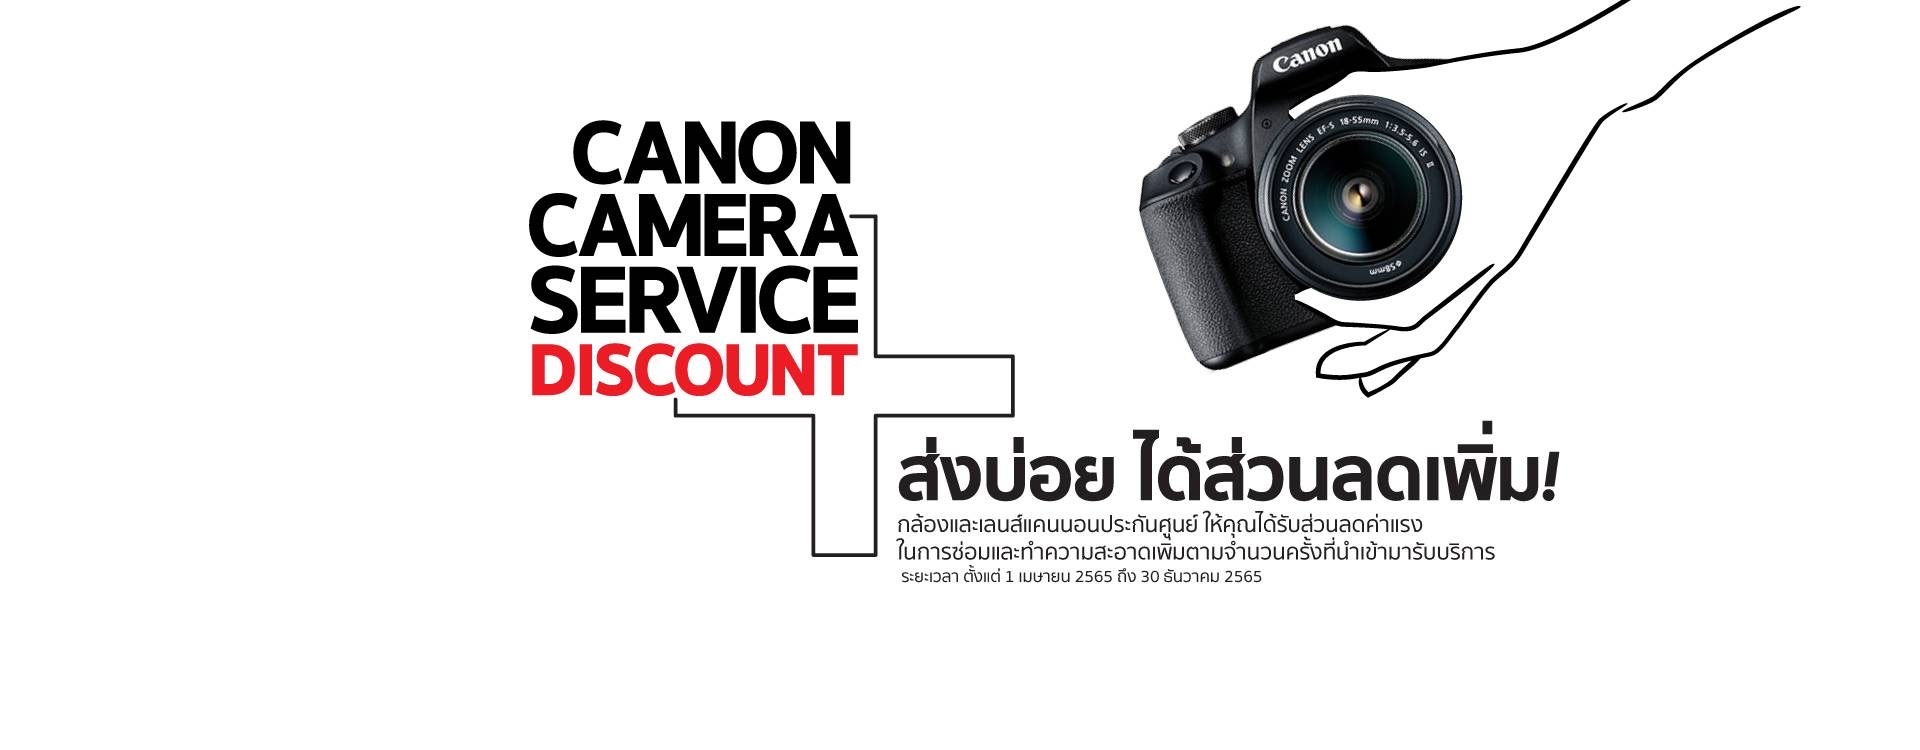 Canon จัดโปรโมชั่นฉลองครบรอบ 35 ปี ลดค่าแรงซ่อมกล้องและเลนส์กว่า 40% 